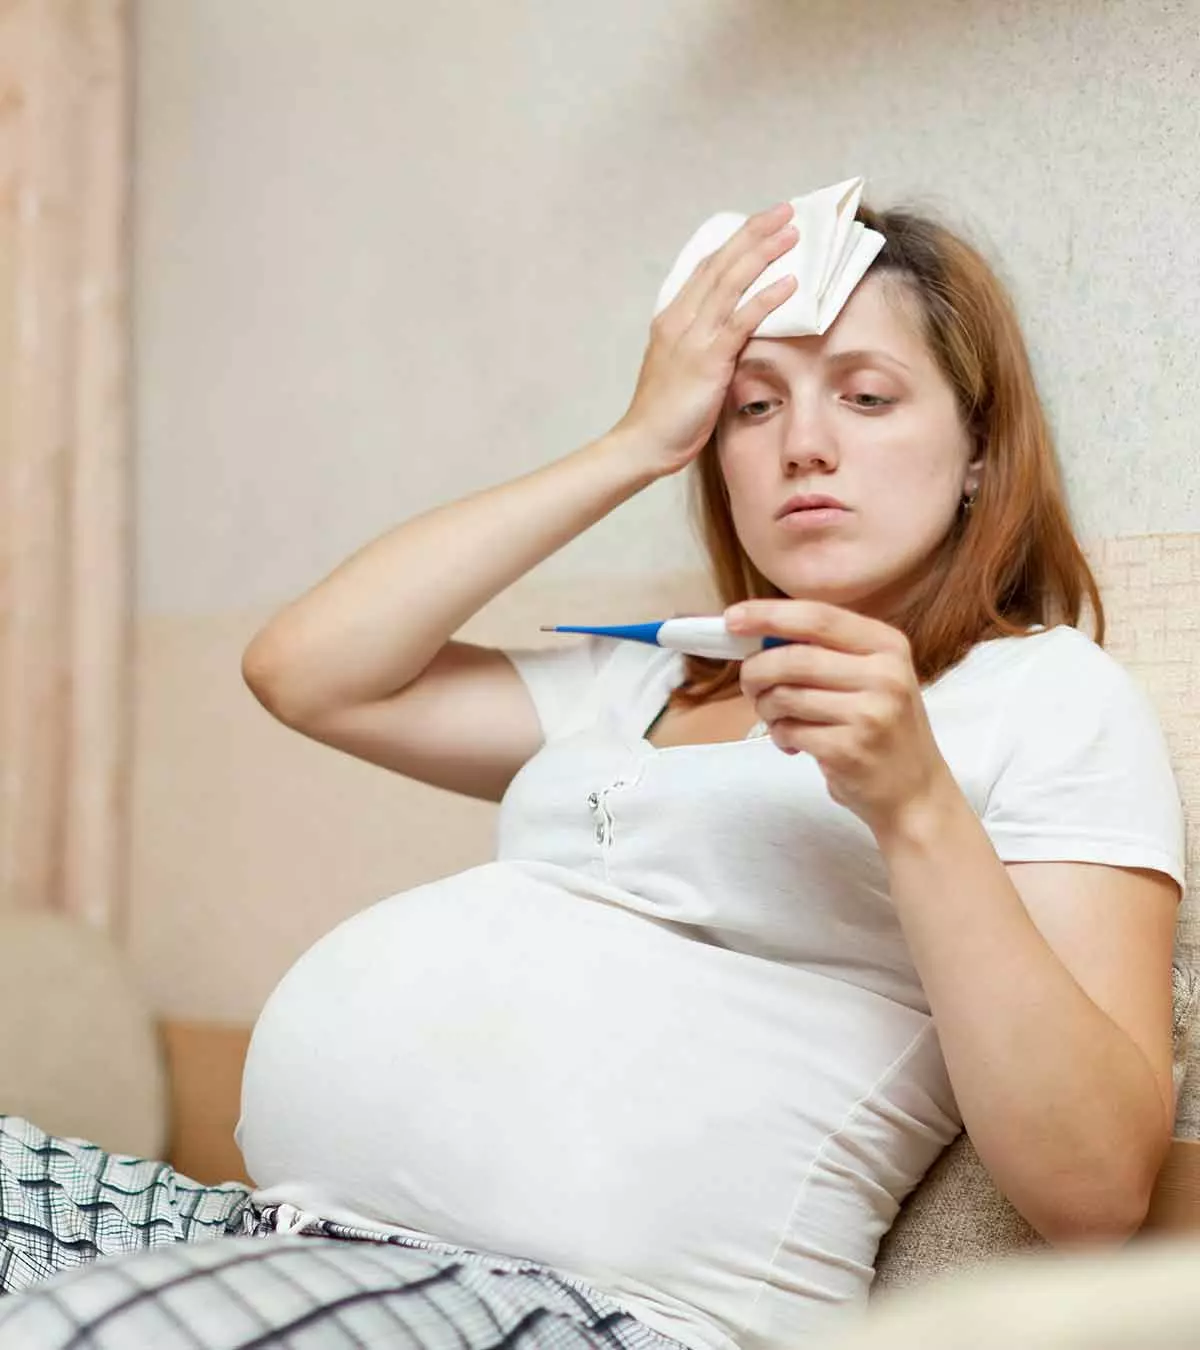 Malaria During Pregnancy: Symptoms, Treatment & Prevention